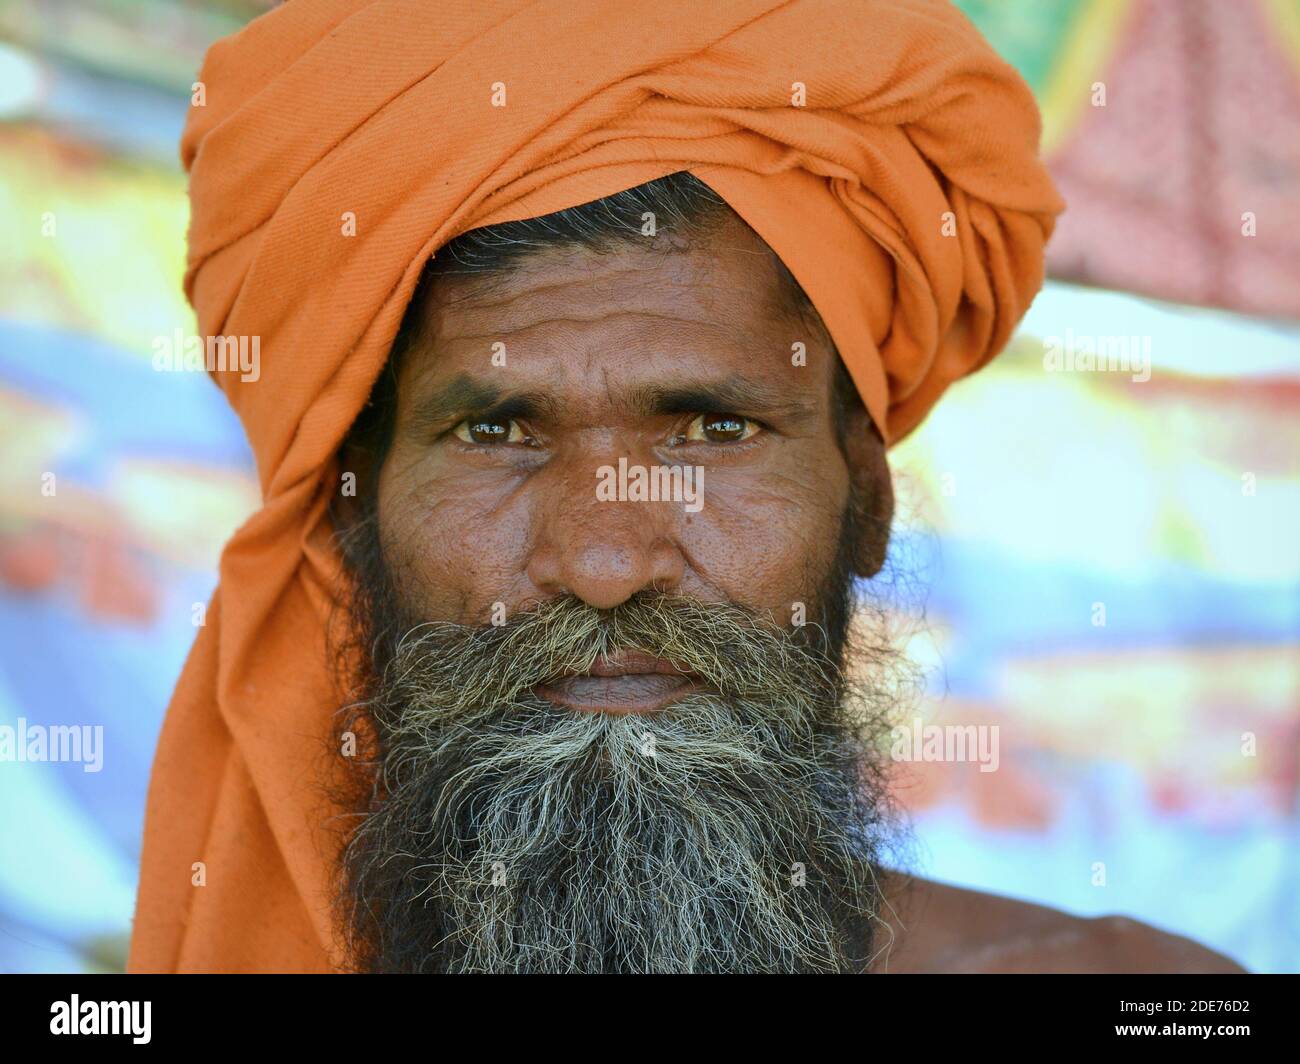 Serious looking Indian Hindu holy man (sadhu, baba, guru) wears a saffron colored turban and poses for the camera during Shivratri Mela festival. Stock Photo